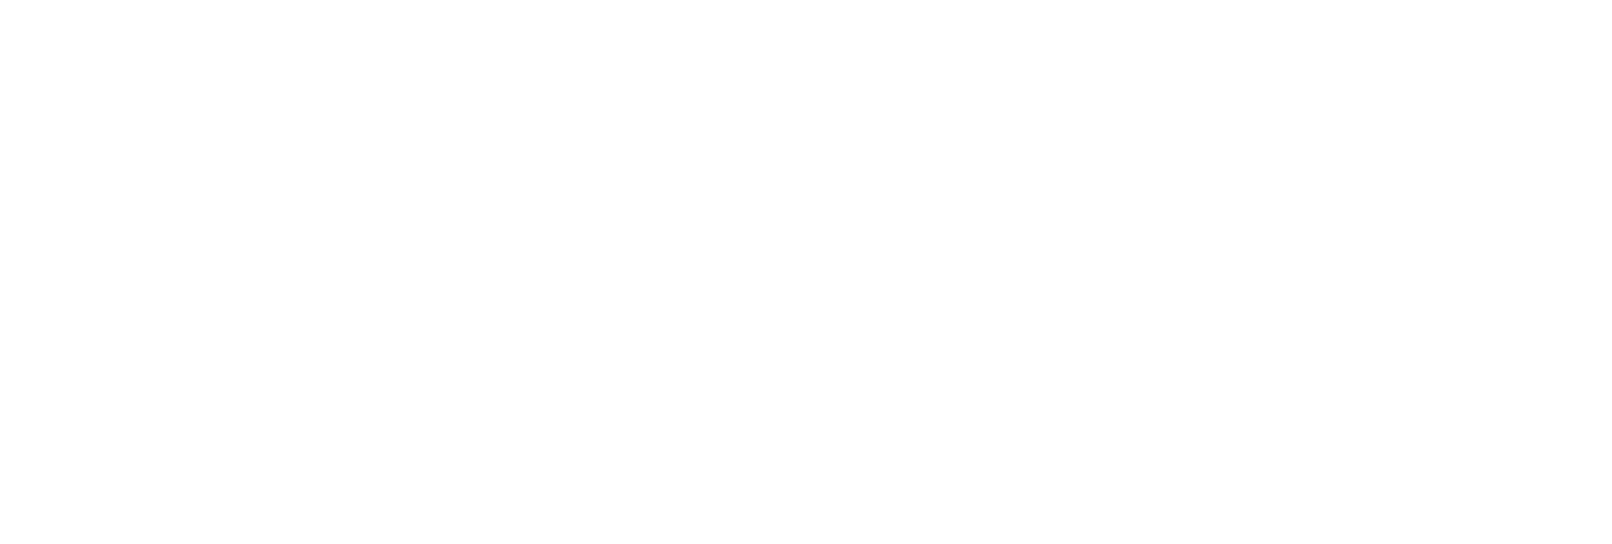 Bistro George Logo